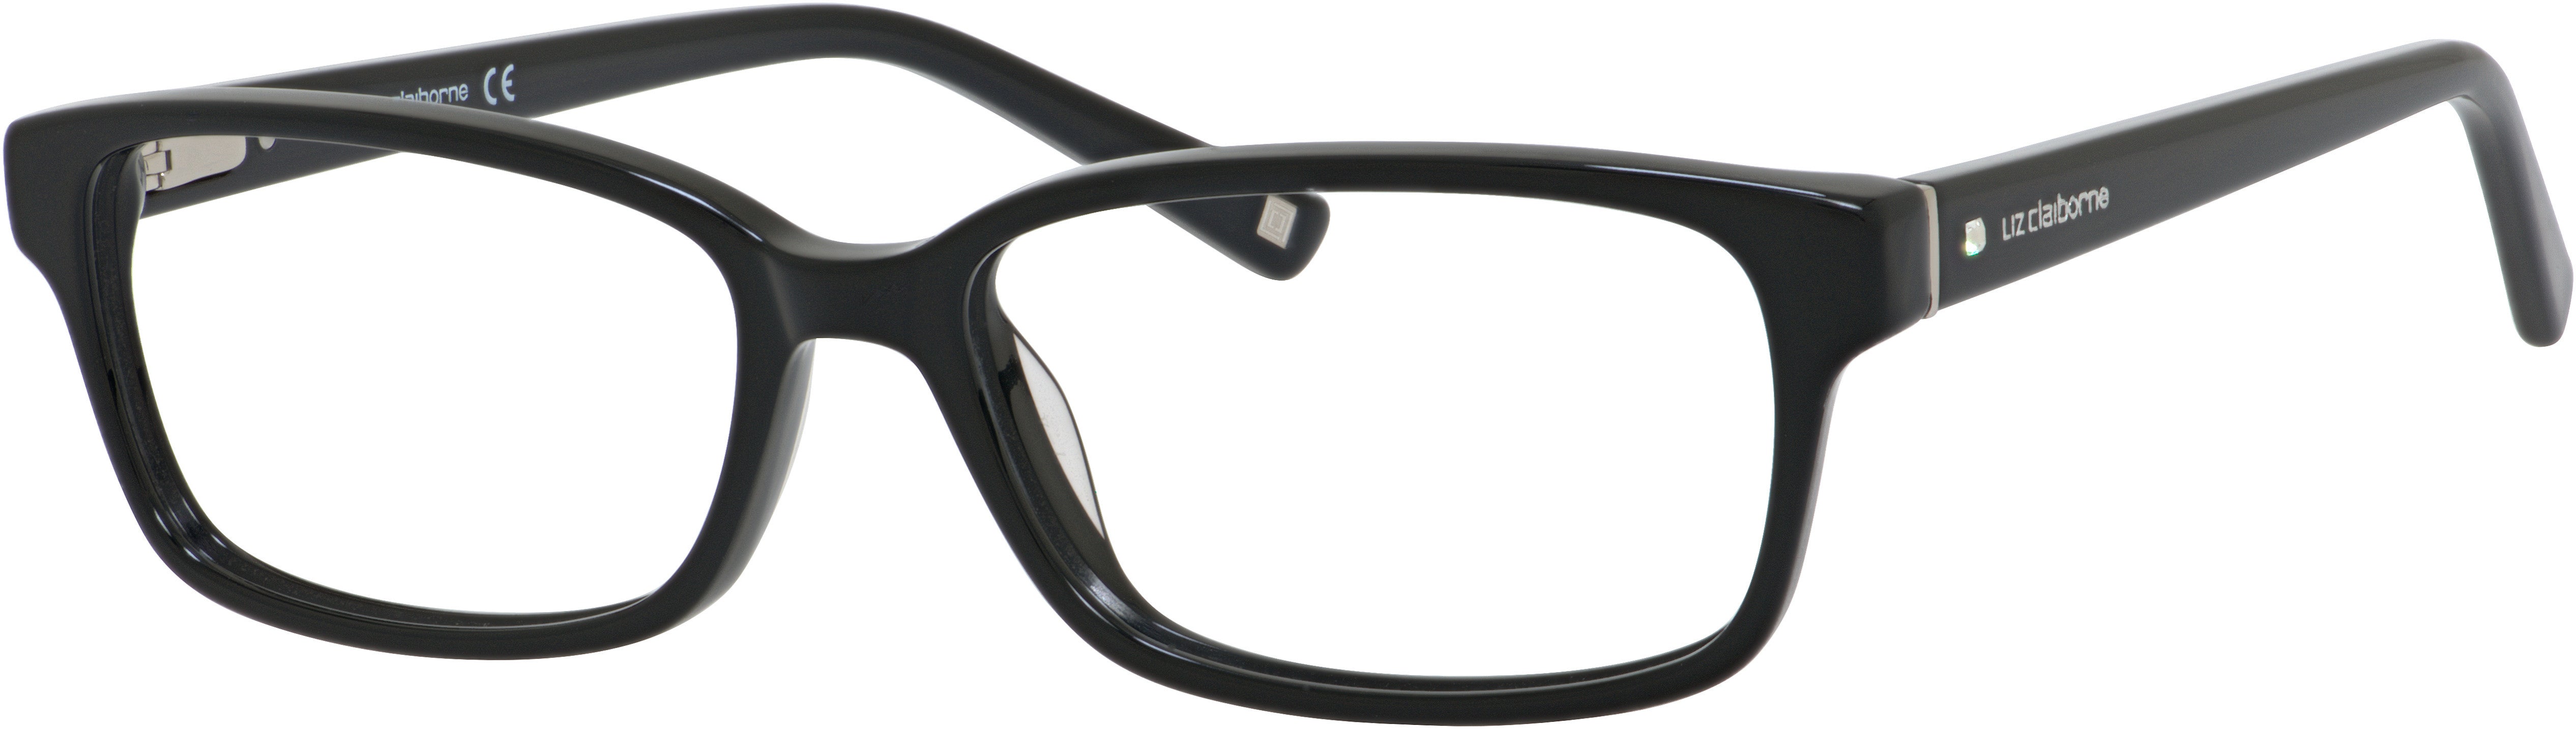  Liz Claiborne 633 Rectangular Eyeglasses 0807-0807  Black (00 Demo Lens)